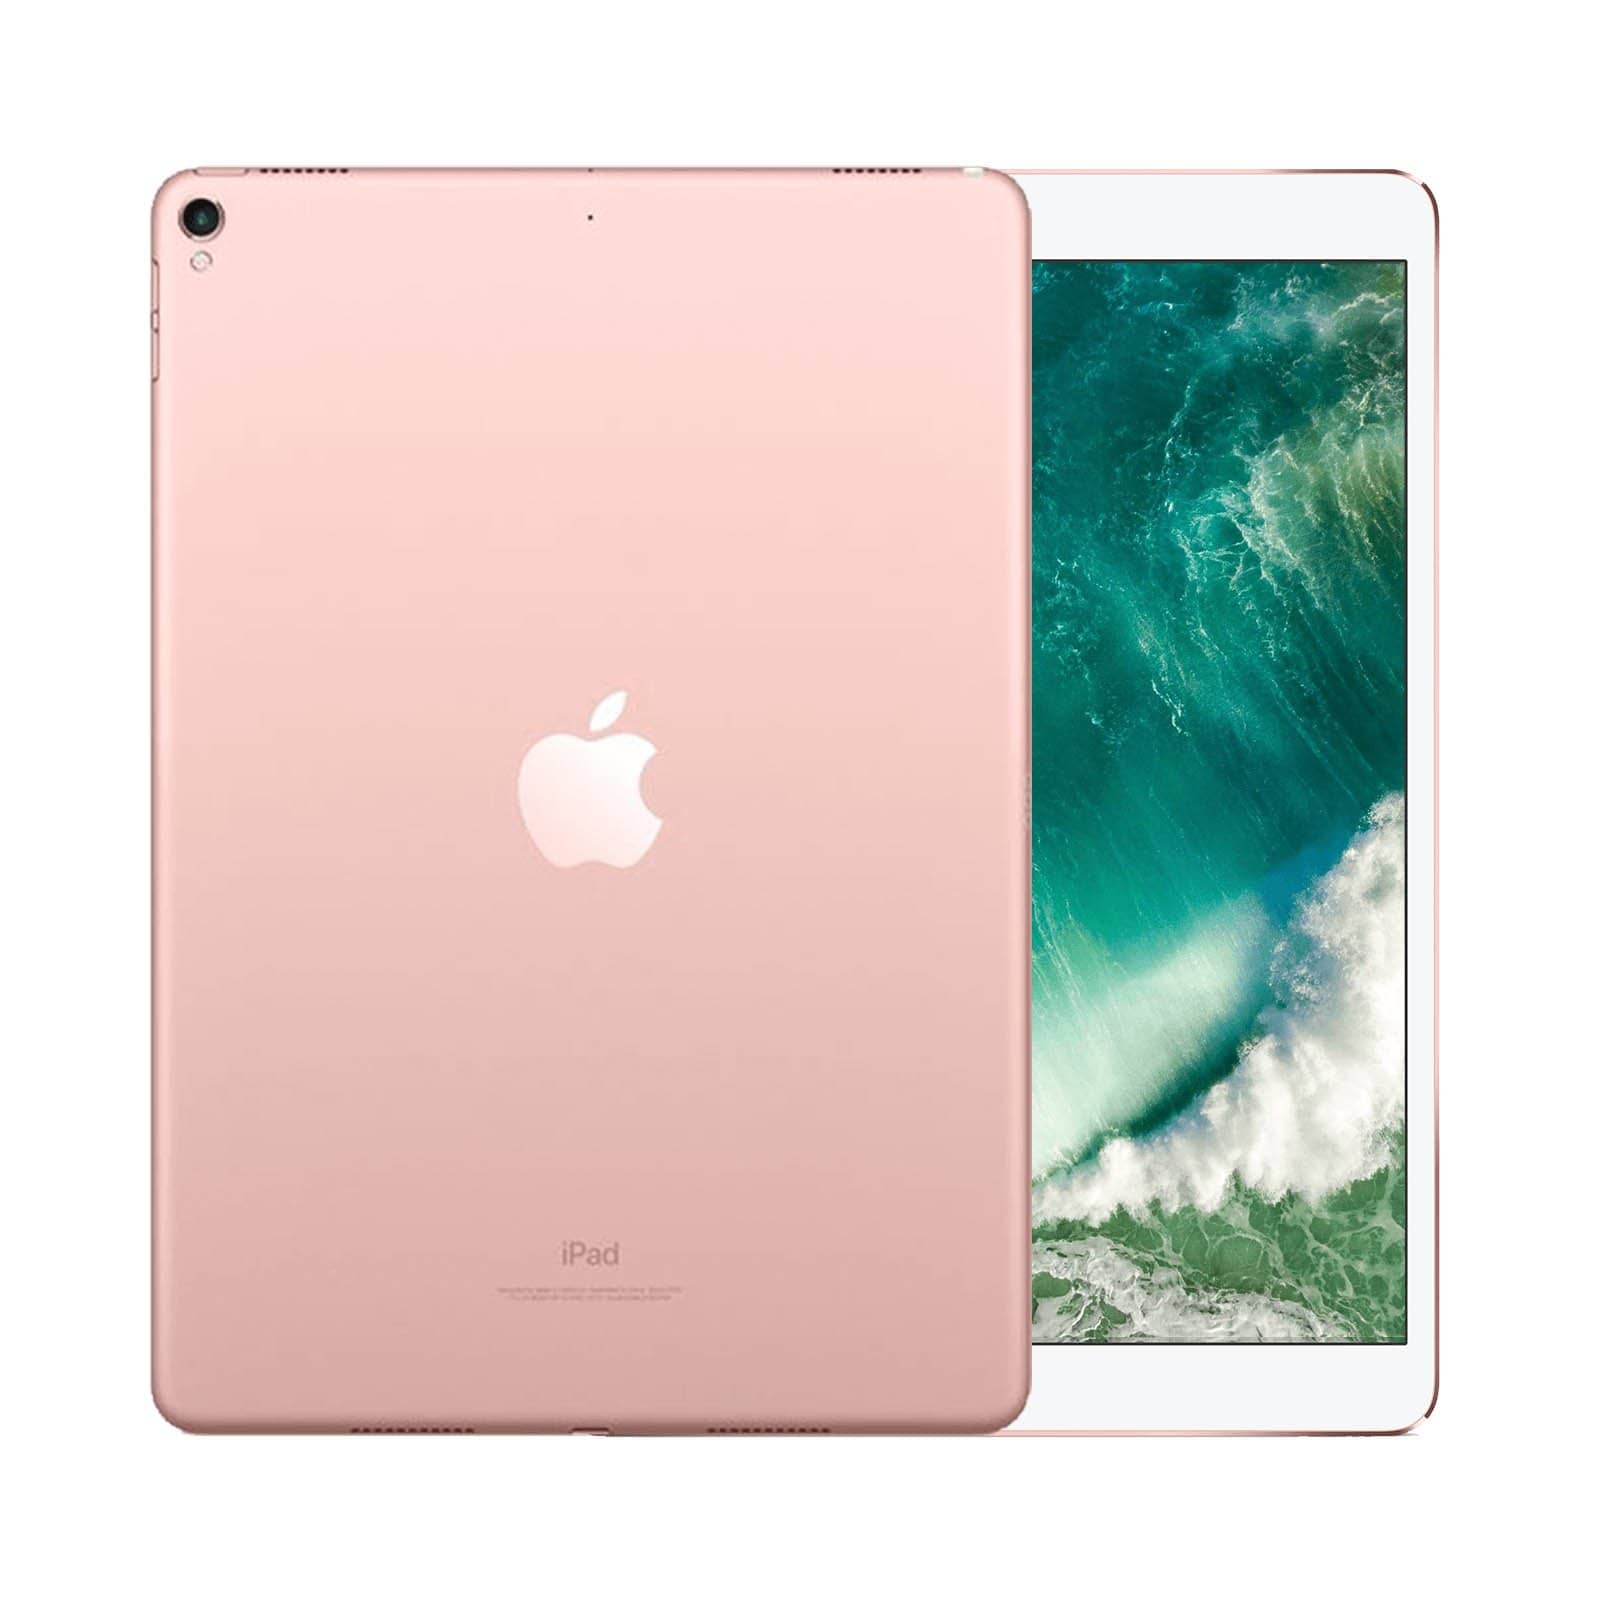 iPad Pro 10.5 Inch 64GB Rose Gold Good - WiFi 64GB Rose Gold Good